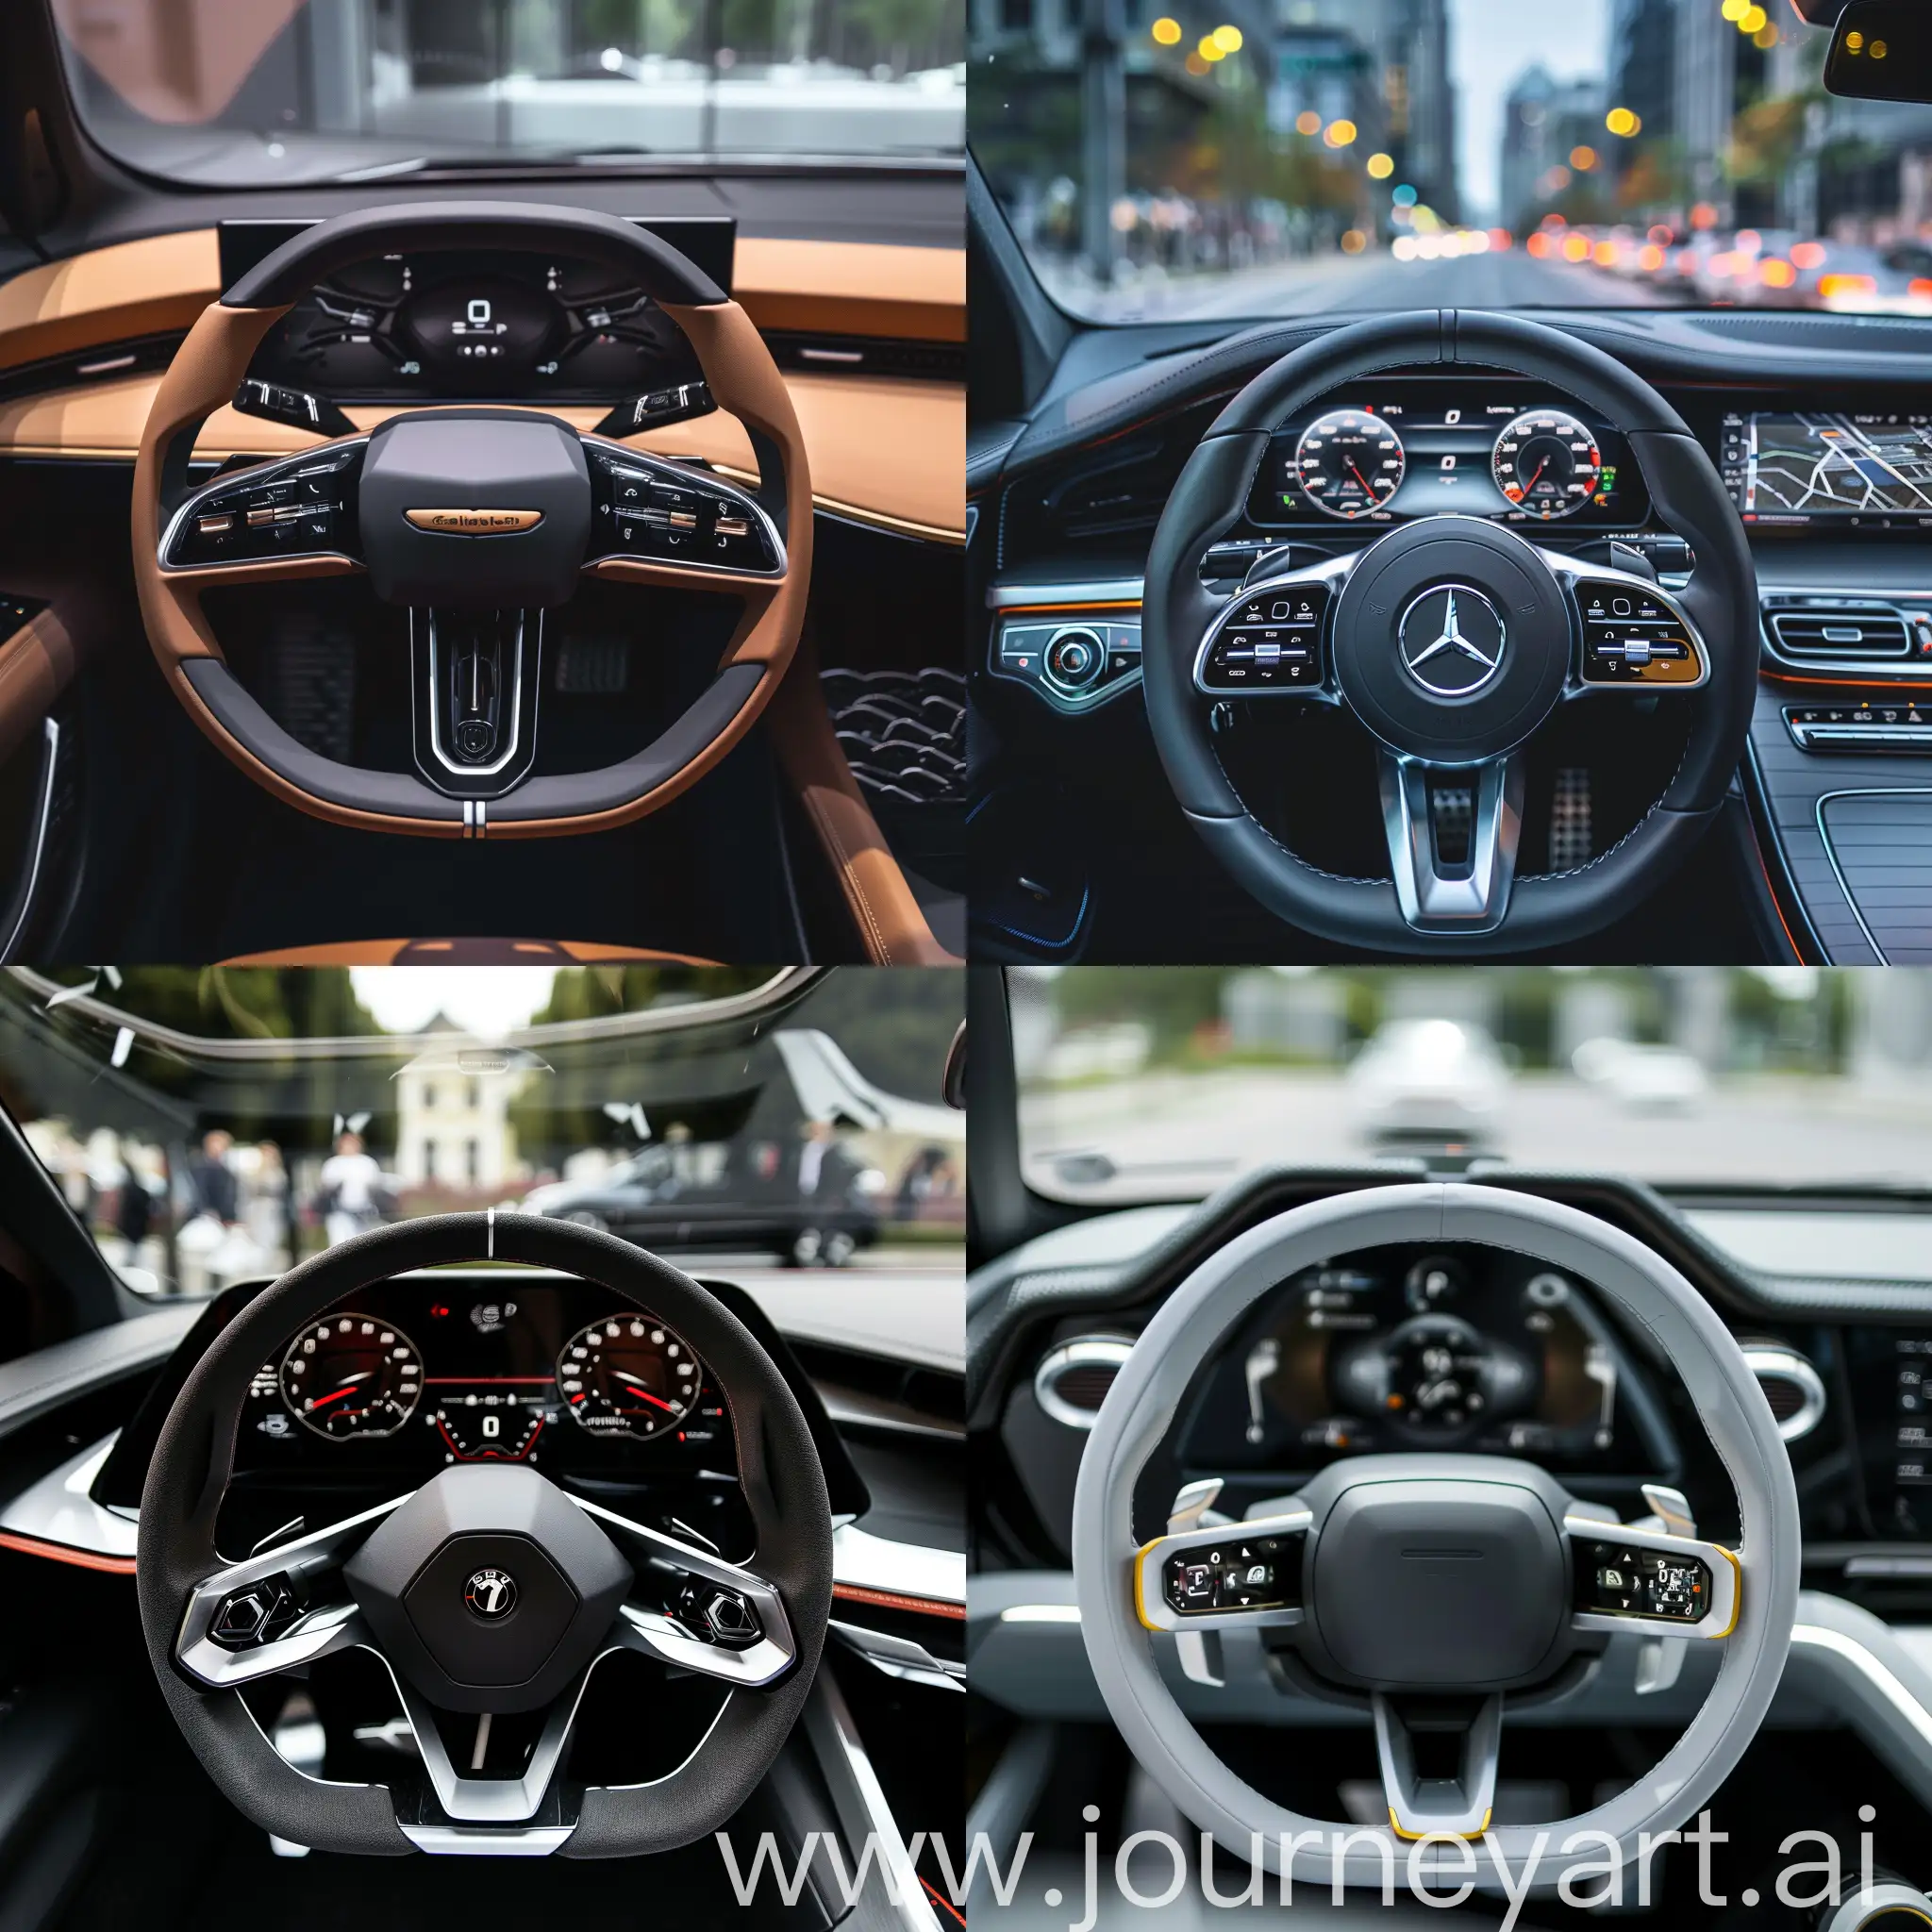 Sleek-V6-Car-Interior-Modern-Instrument-Panel-and-Steering-Wheel-Design